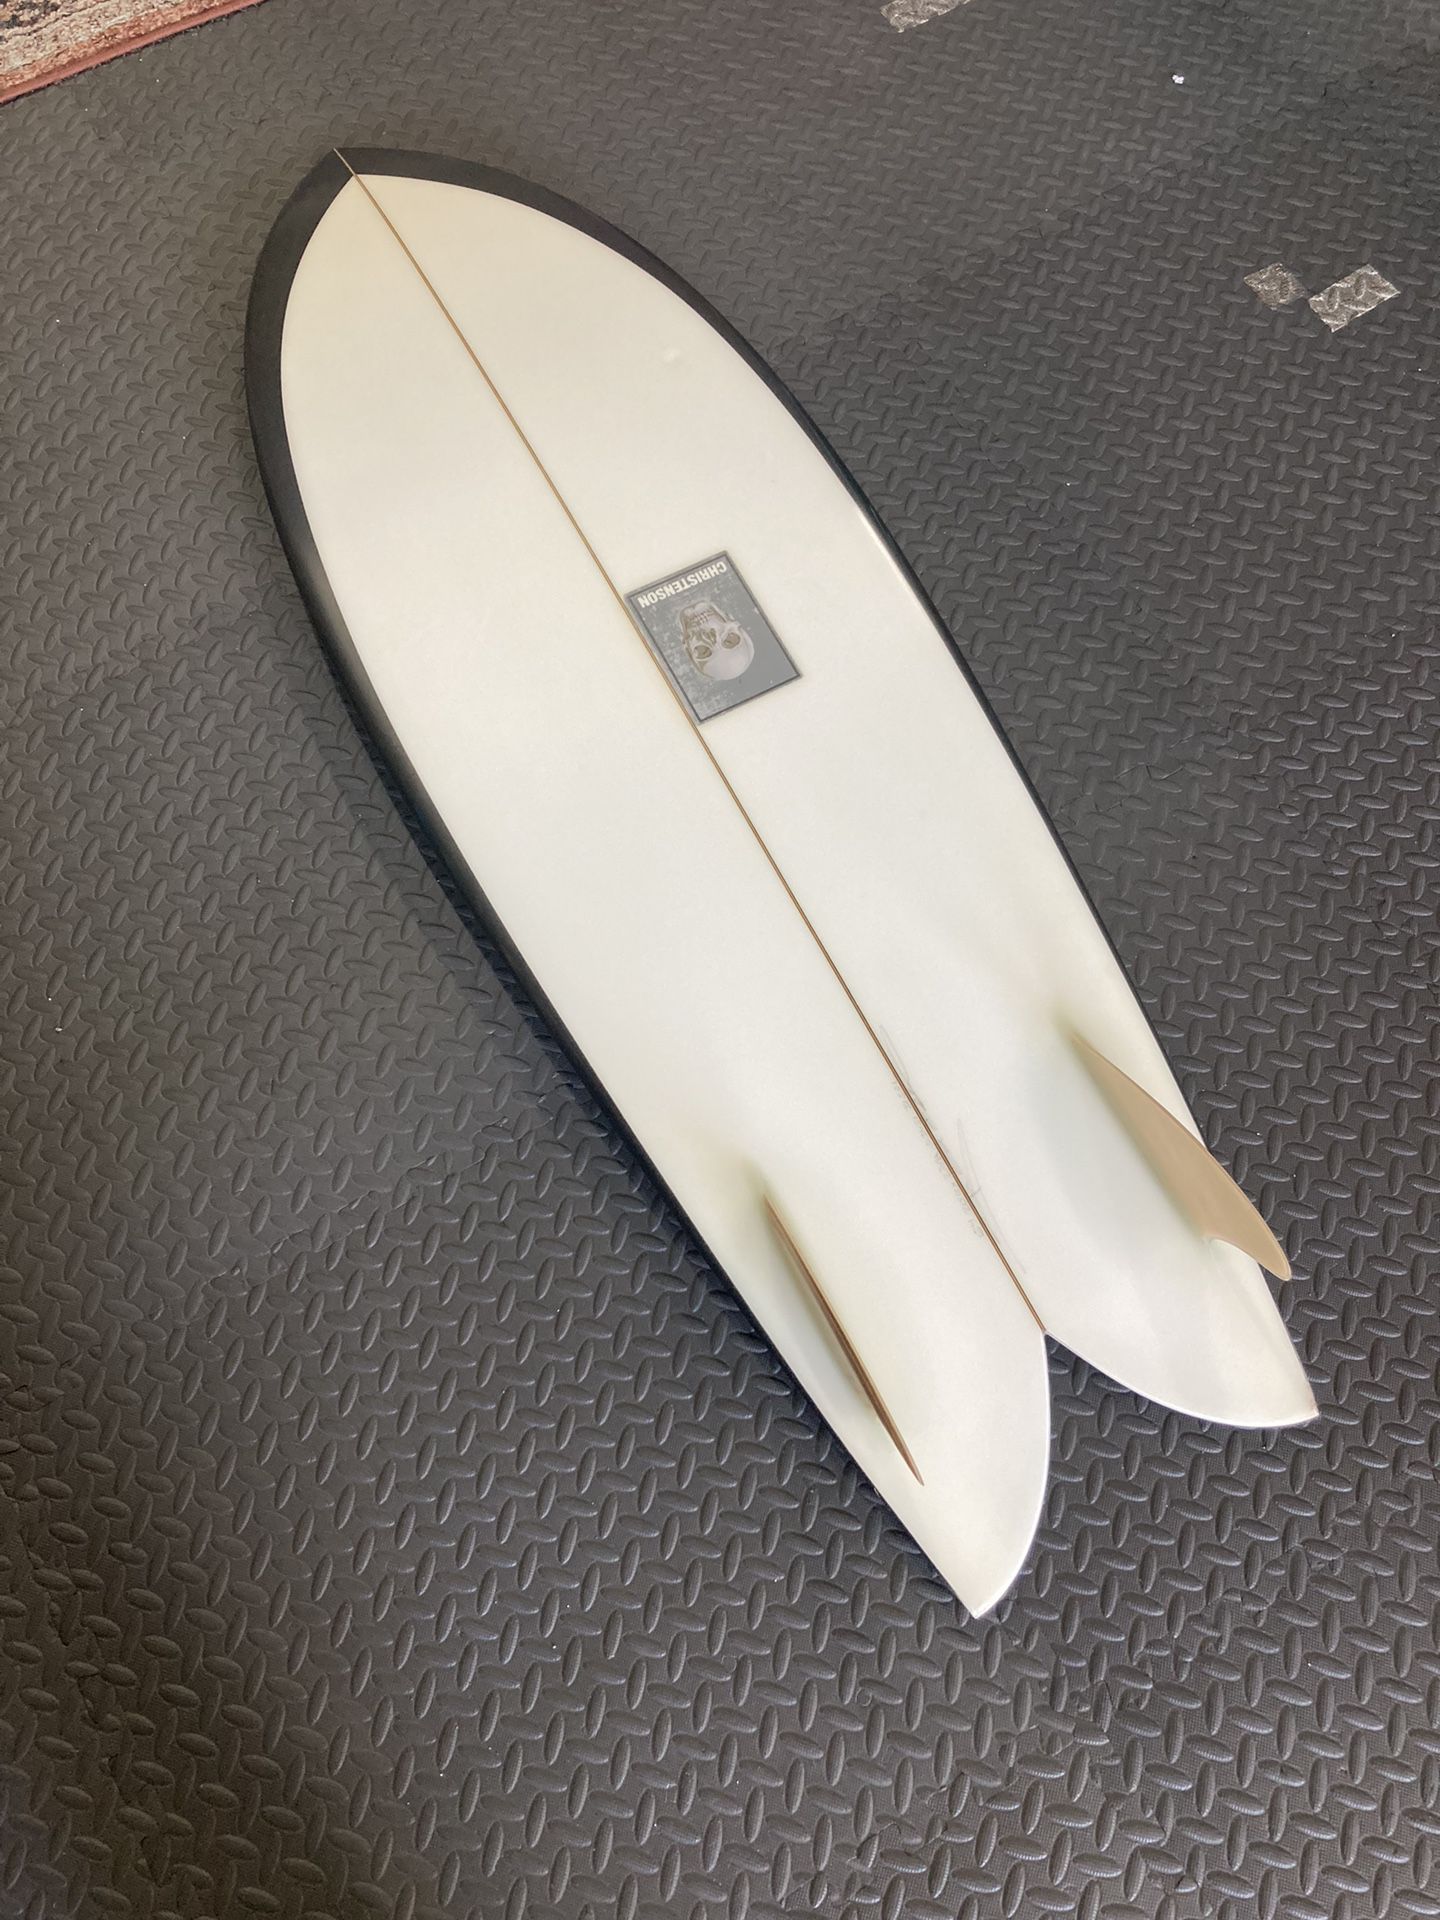 5’4 Christenson Fish Surfboard